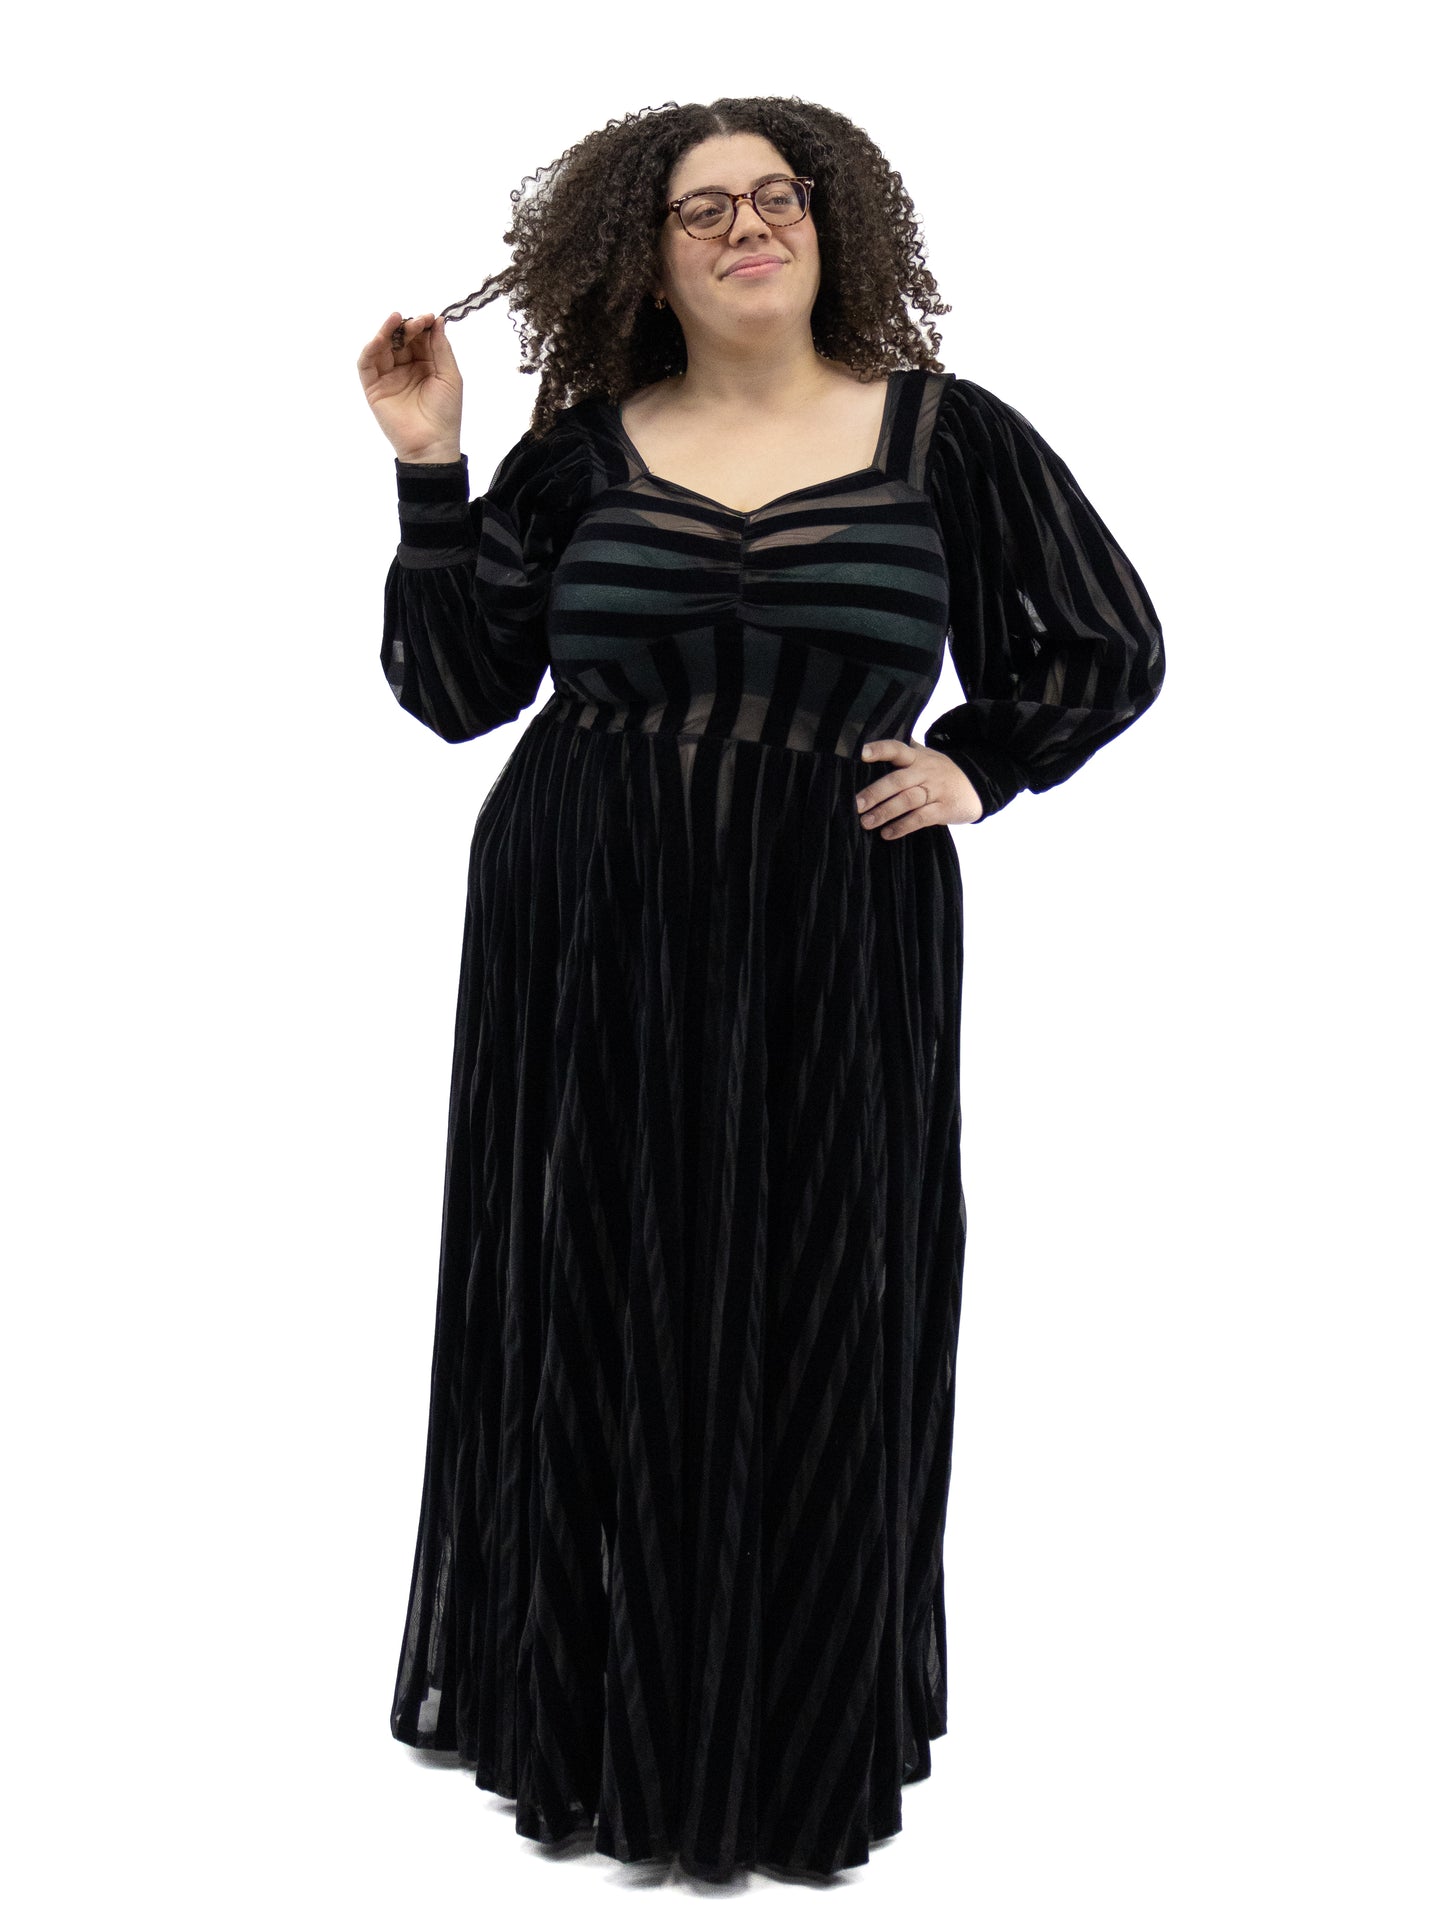 Victoria Striped Mesh Gown